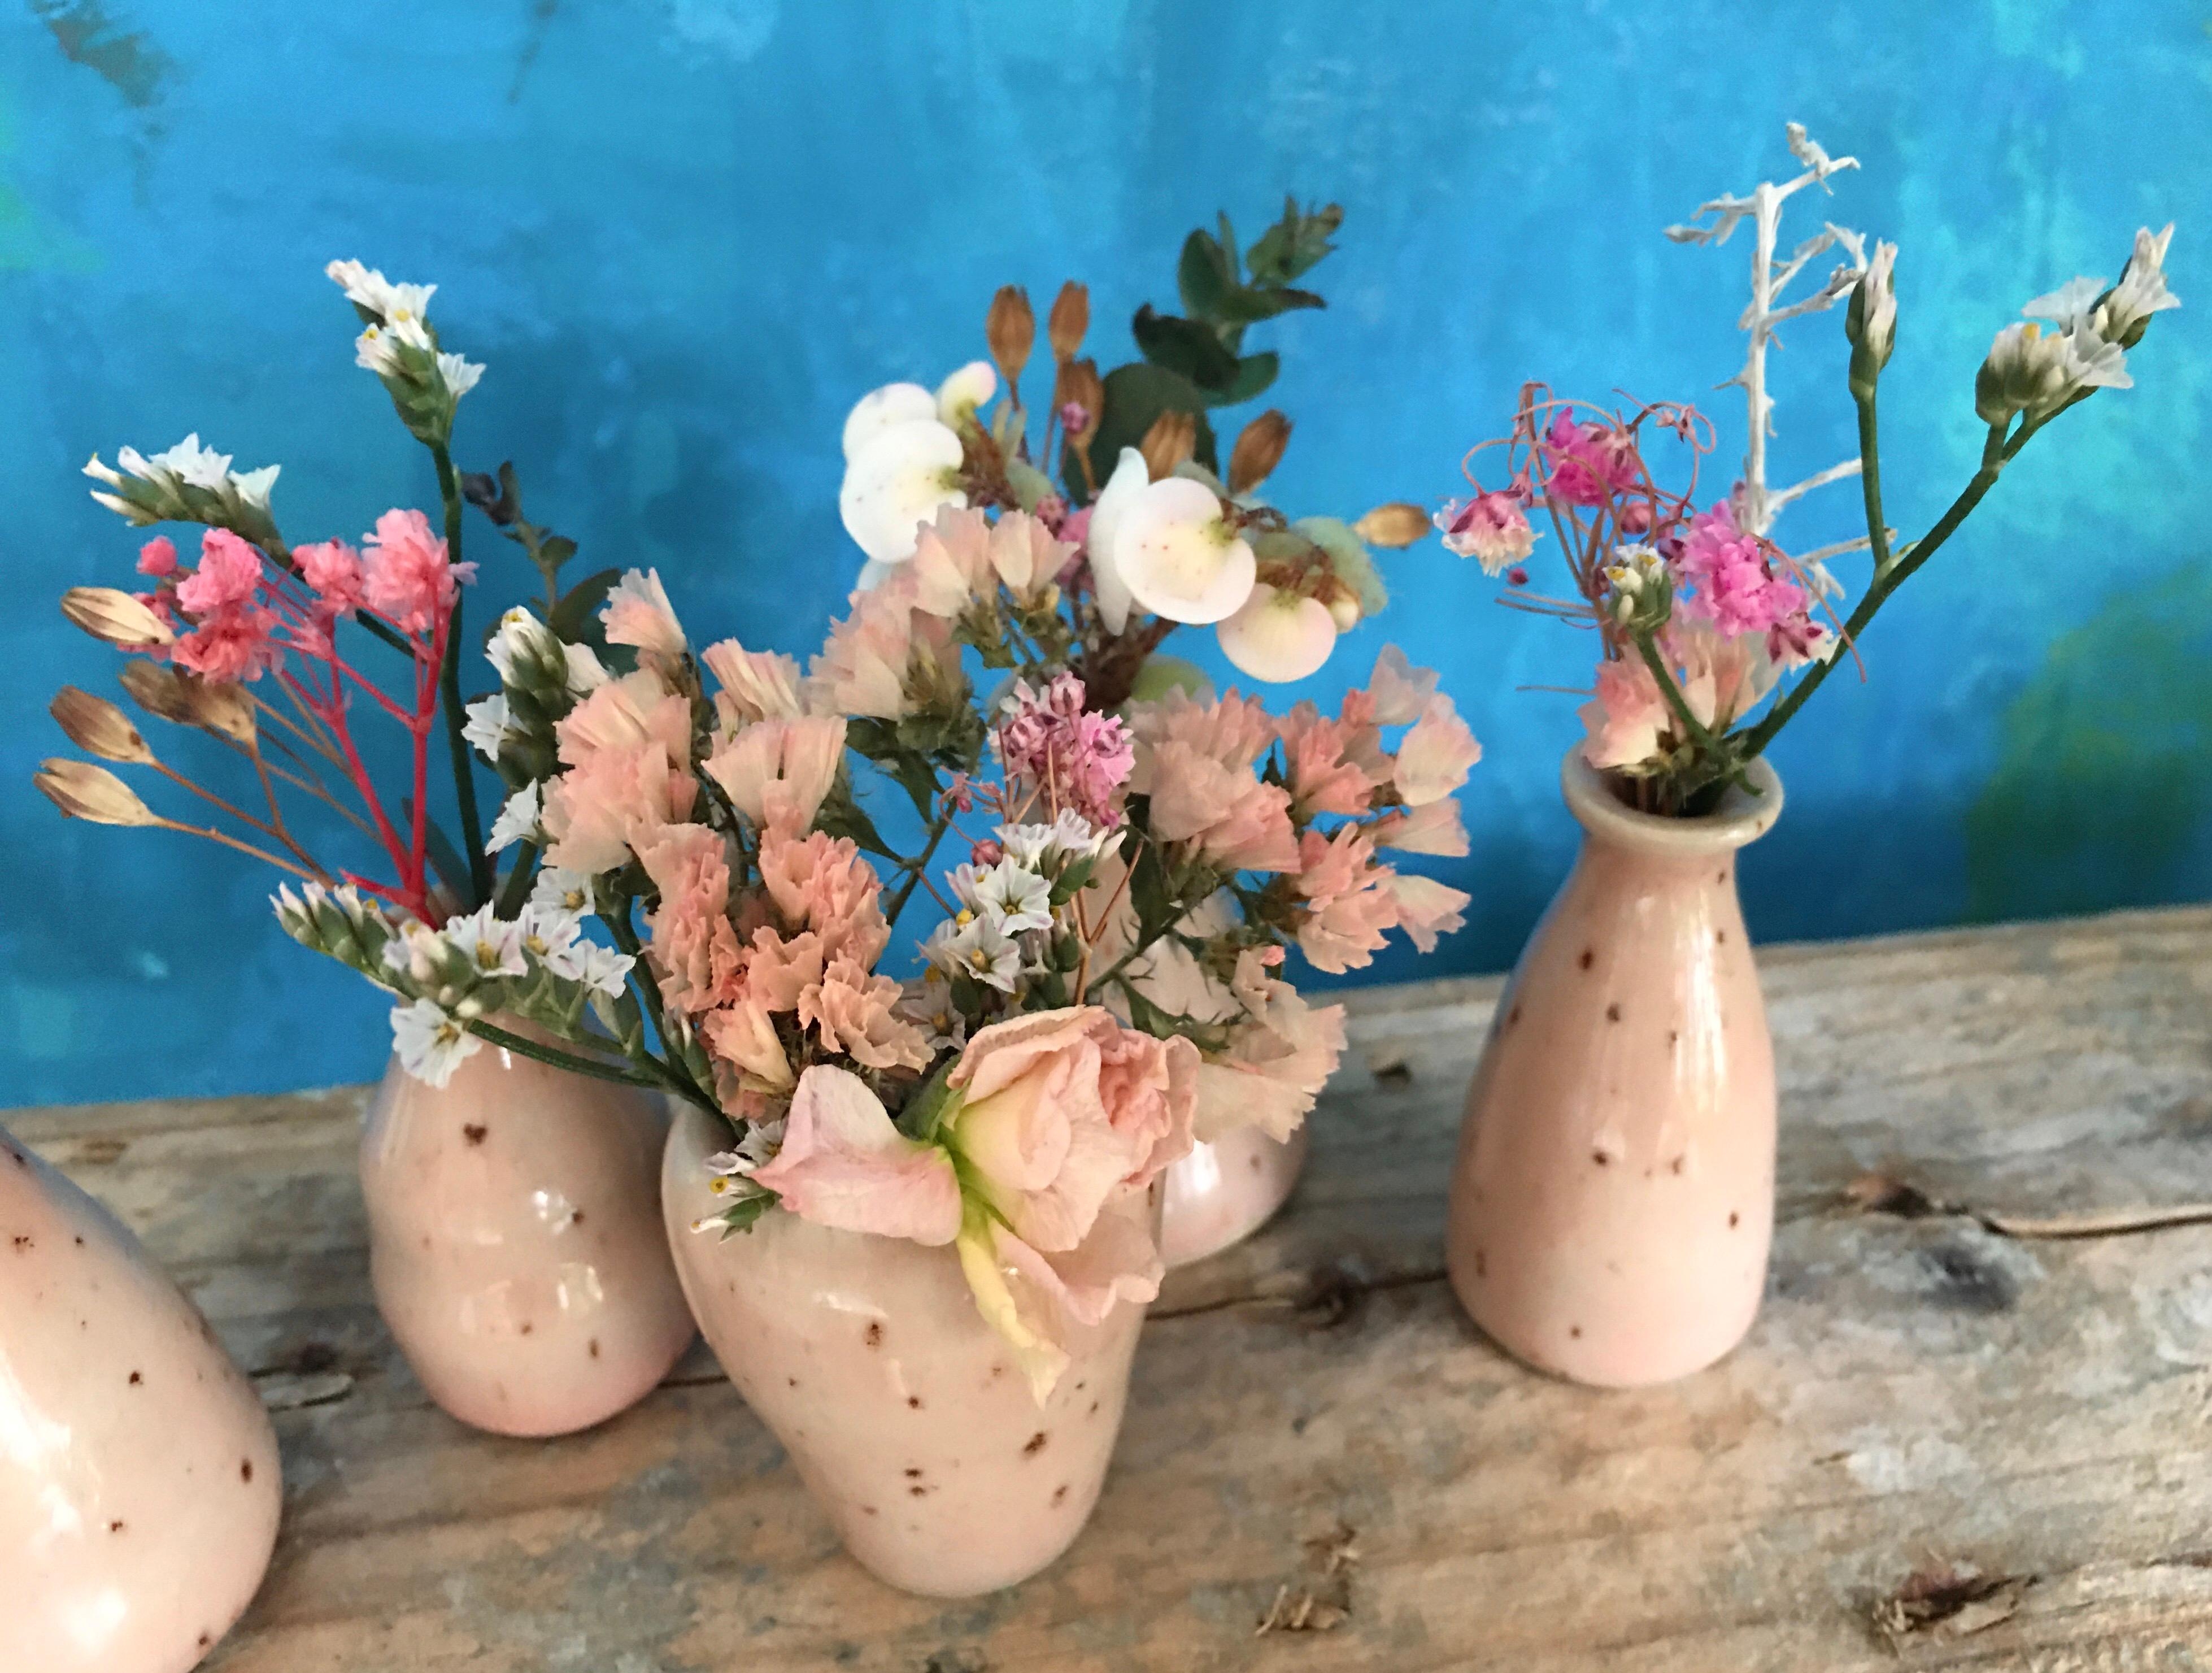 Frühlingsgruß in Minivasen #blumendeko #happy #vase #deko #rosa #vintage #montag